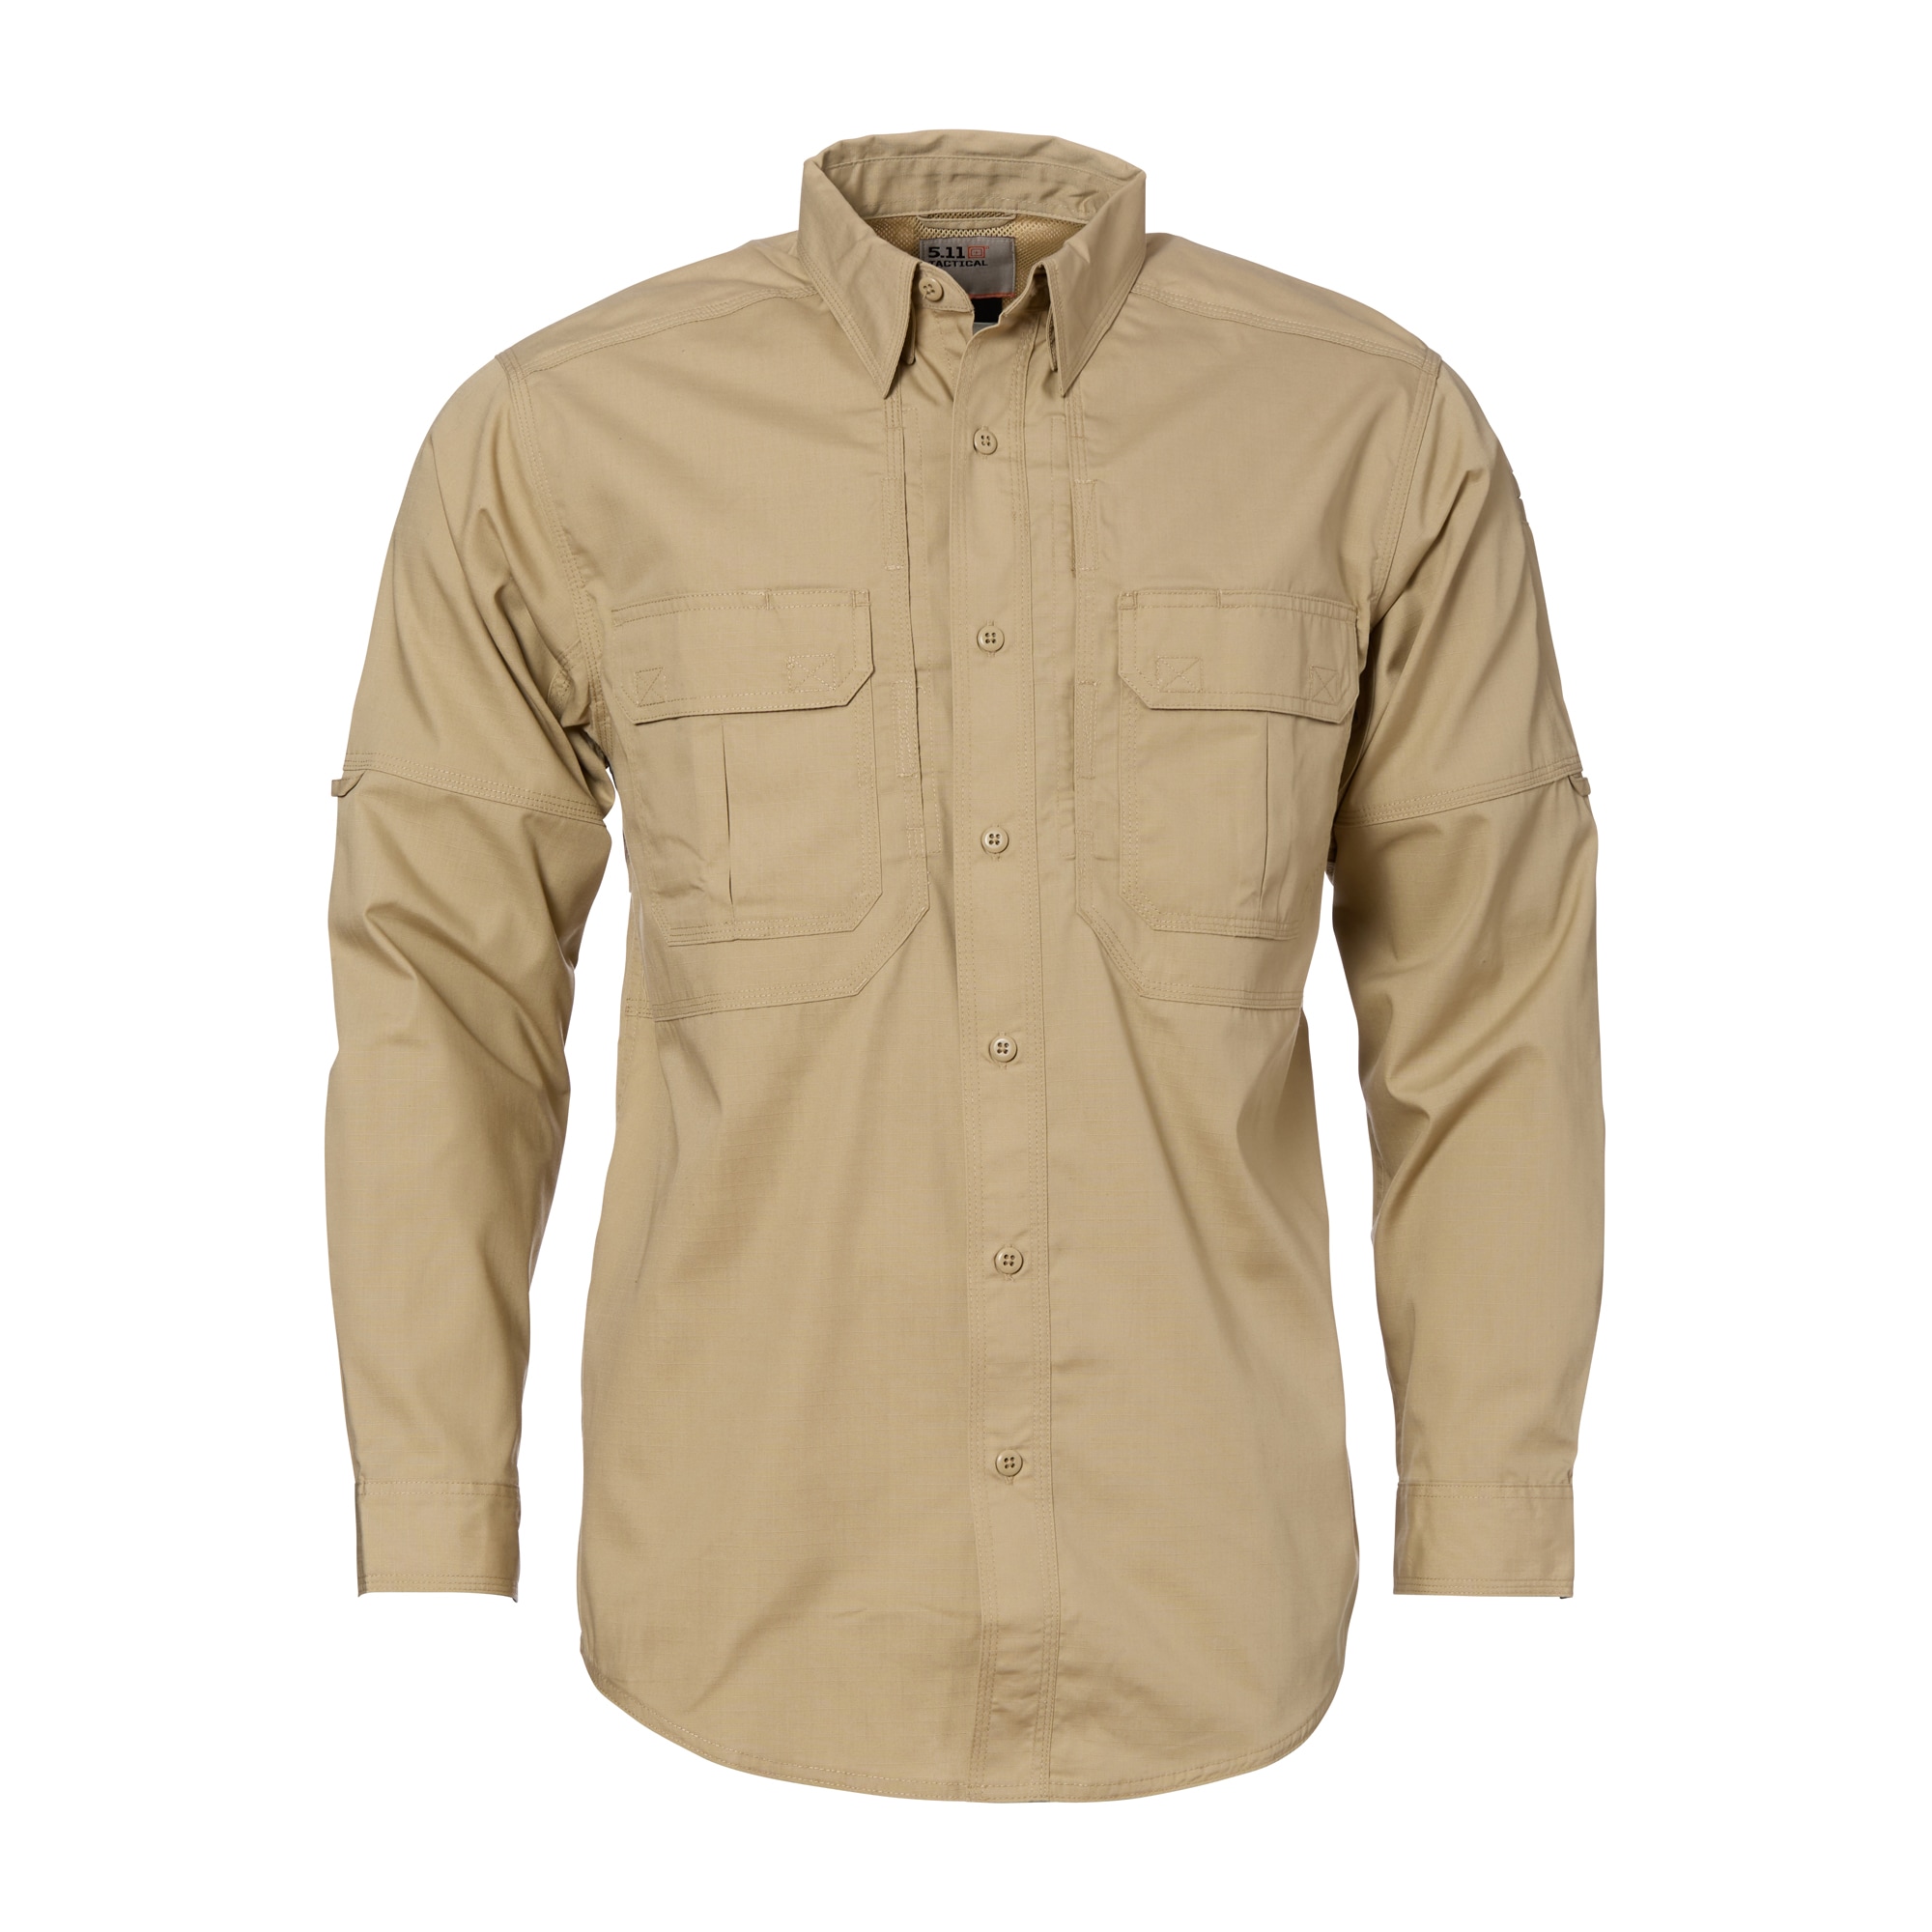 Purchase the 5.11 Taclite Pro Shirt Long Sleeved khaki by ASMC